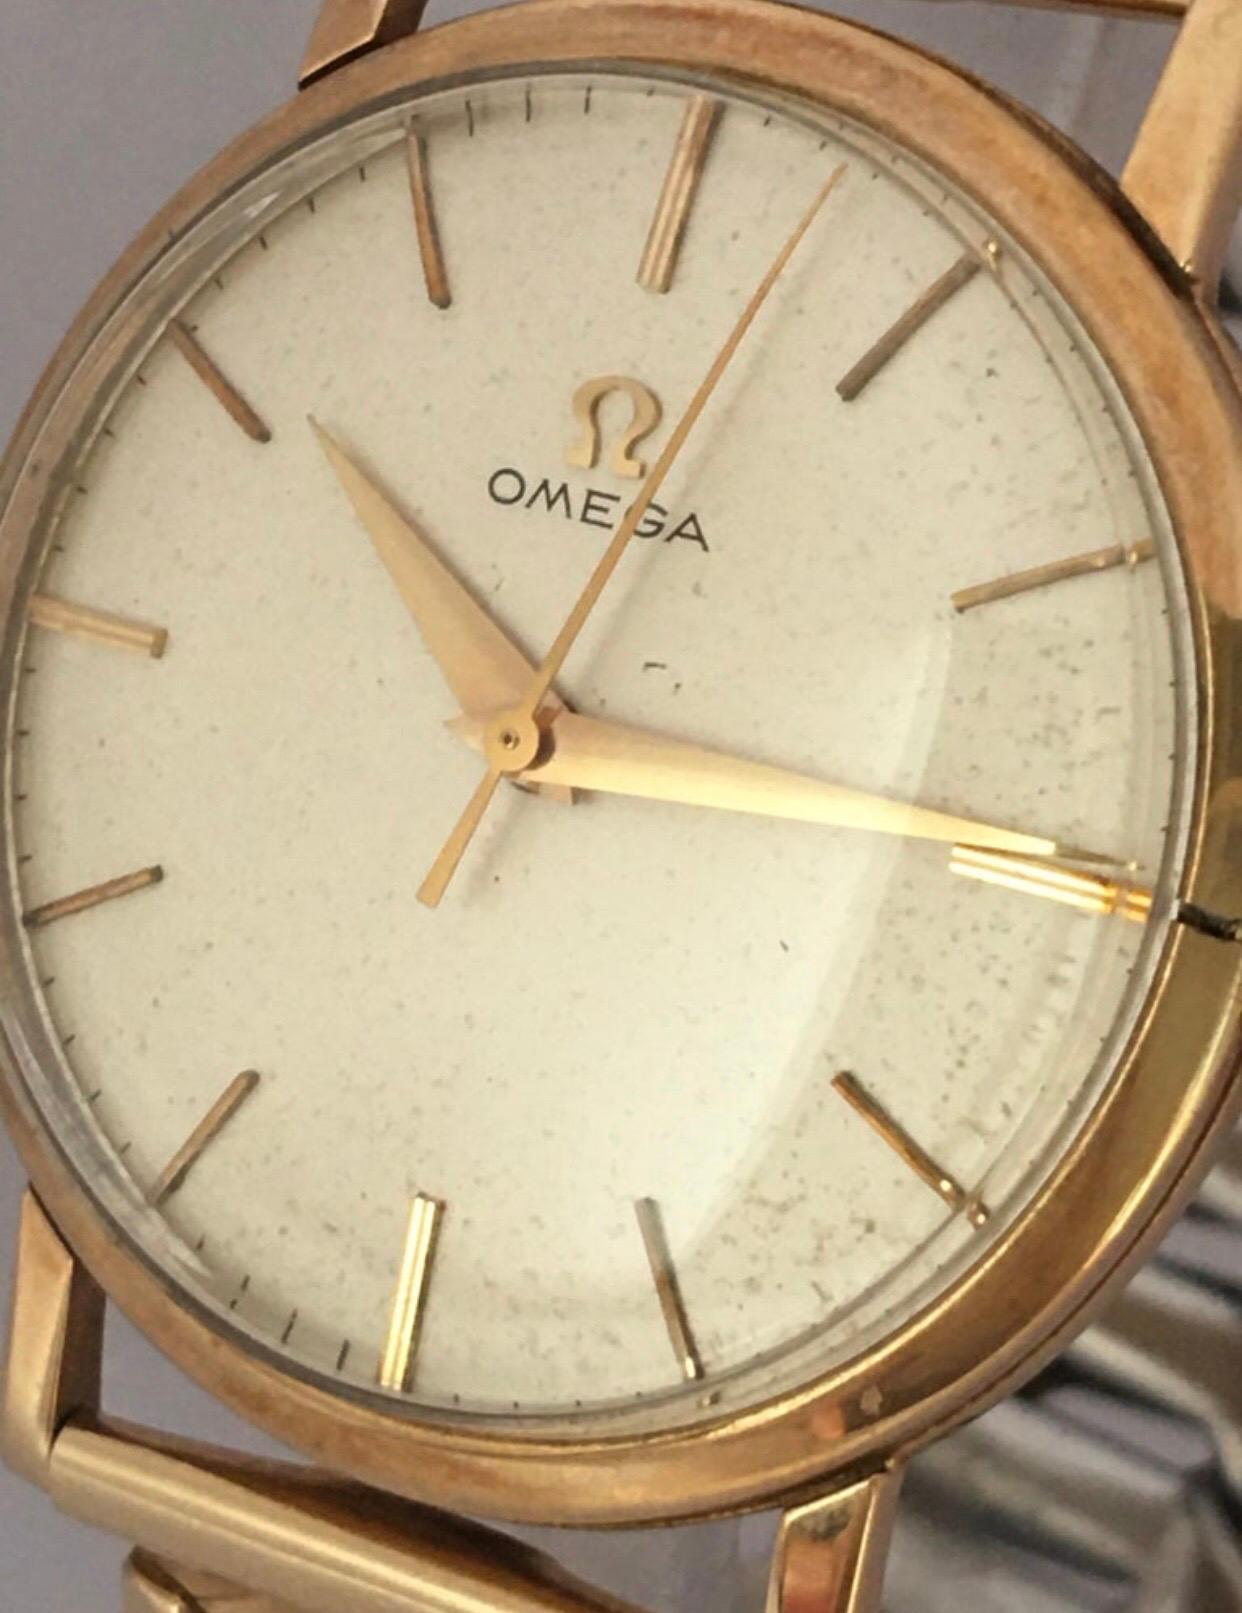 9 Karat Gold and Rolled Gold Bracelet 1960s Omega Mechanical Watch For Sale 6